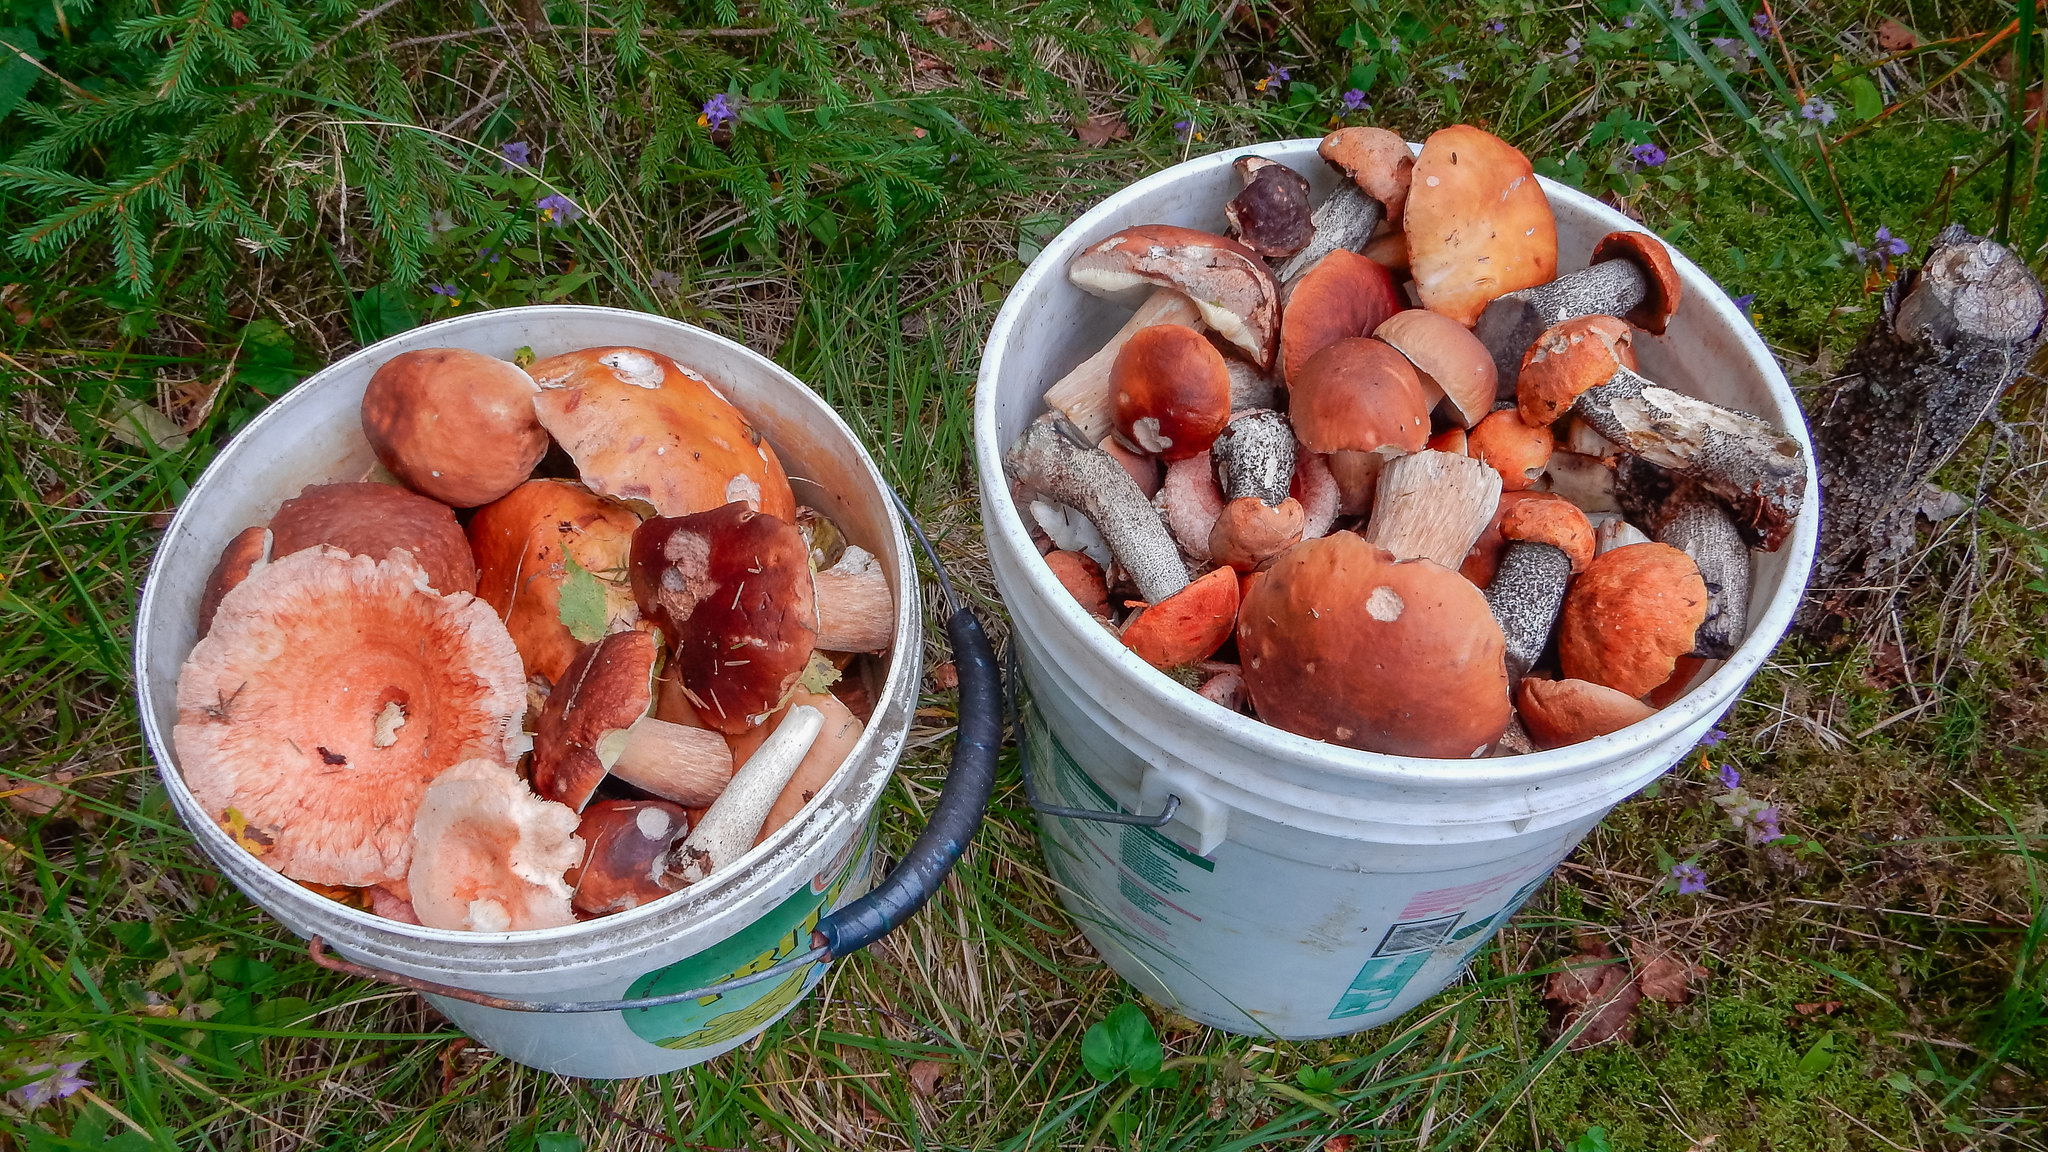 Buckets with mushrooms. By: Igor Nael